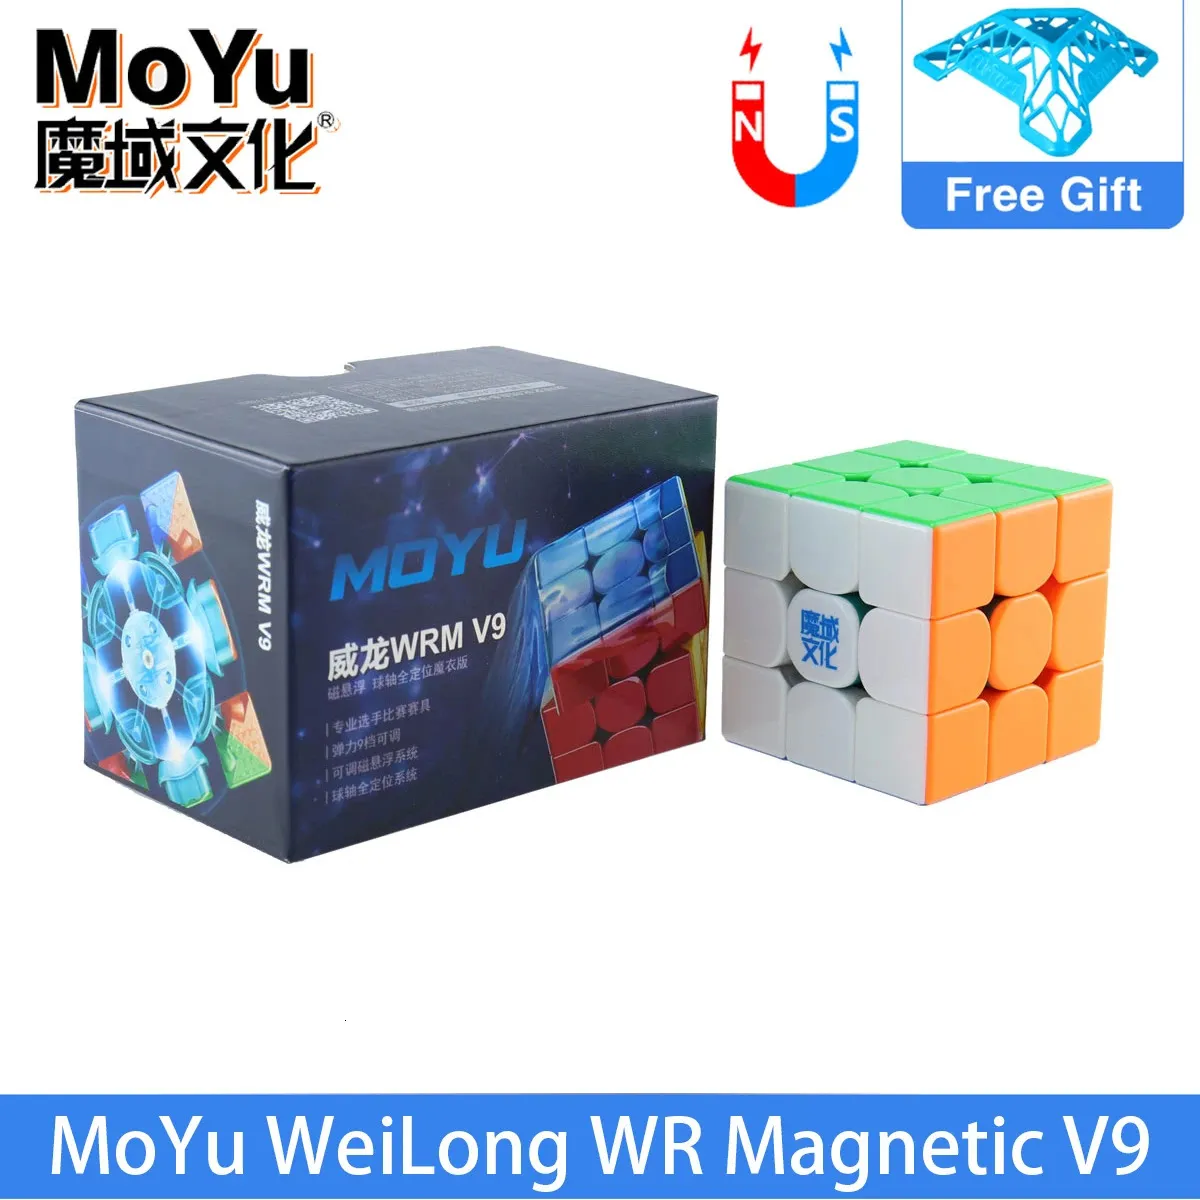 Cubi magici MoYu WeiLong WRM V9 Ball Core UV 3x3 Magic Speed Cube Professional MoYu WeiLong WR M V9 Maglev 3x3x3 Cubo Magico Puzzle Toys 231019